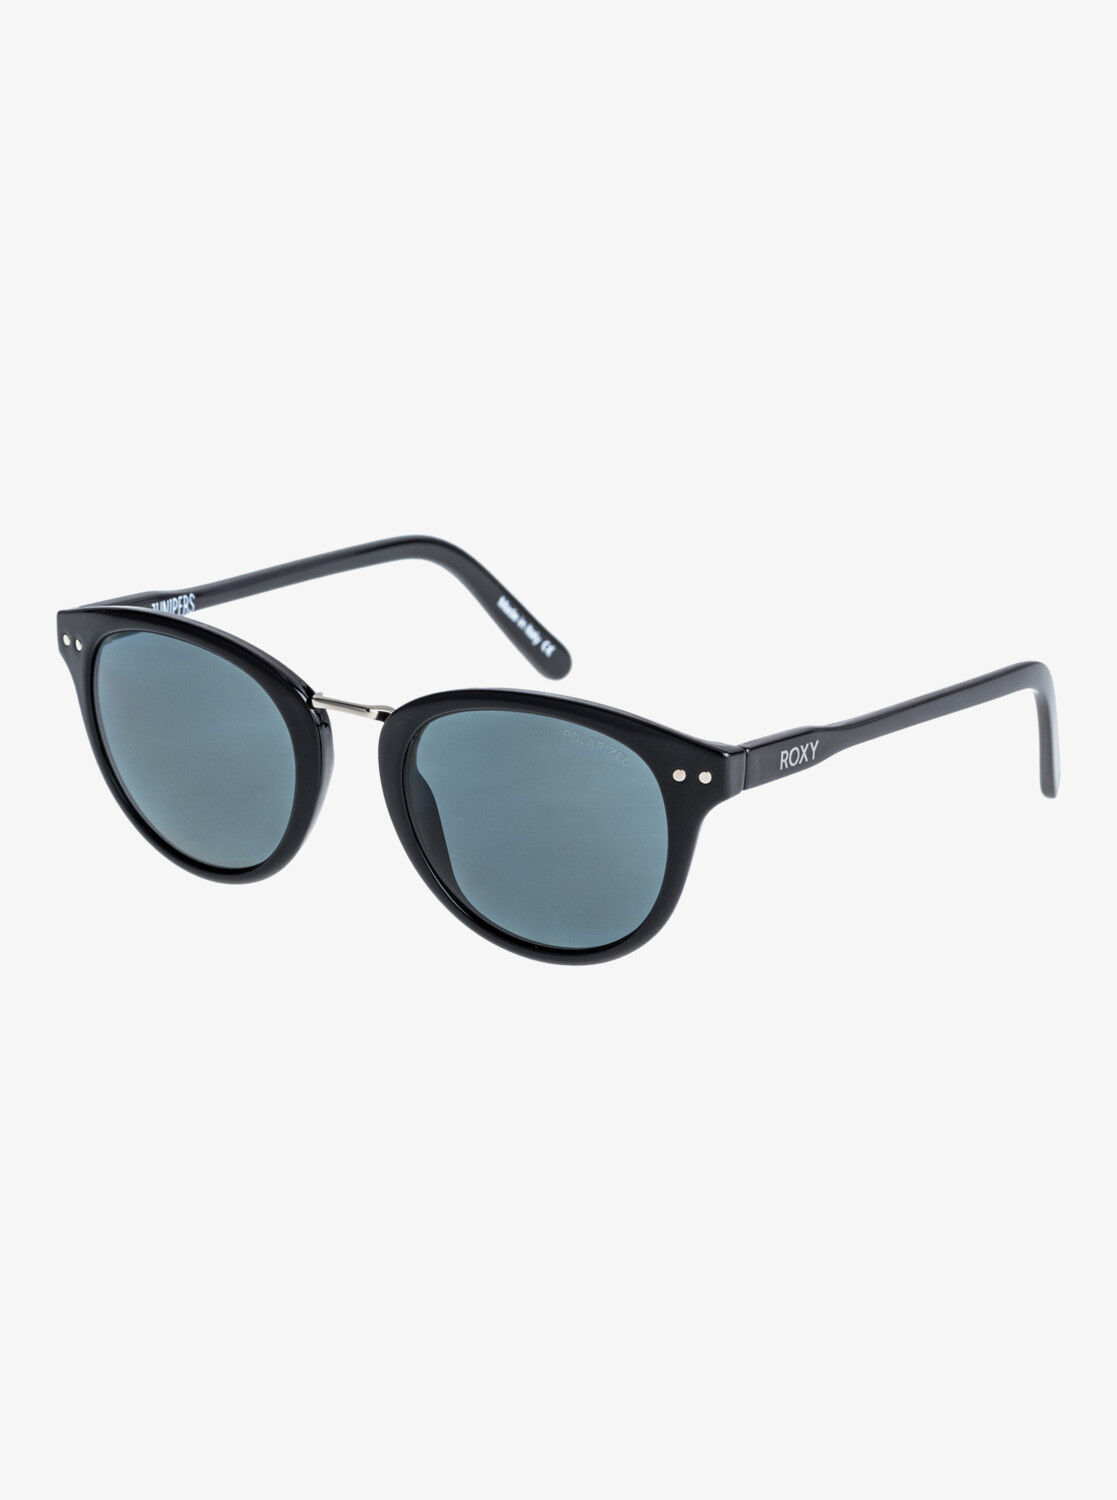 Roxy Junipers Polarized - Sunglasses - Women's | Hardloop